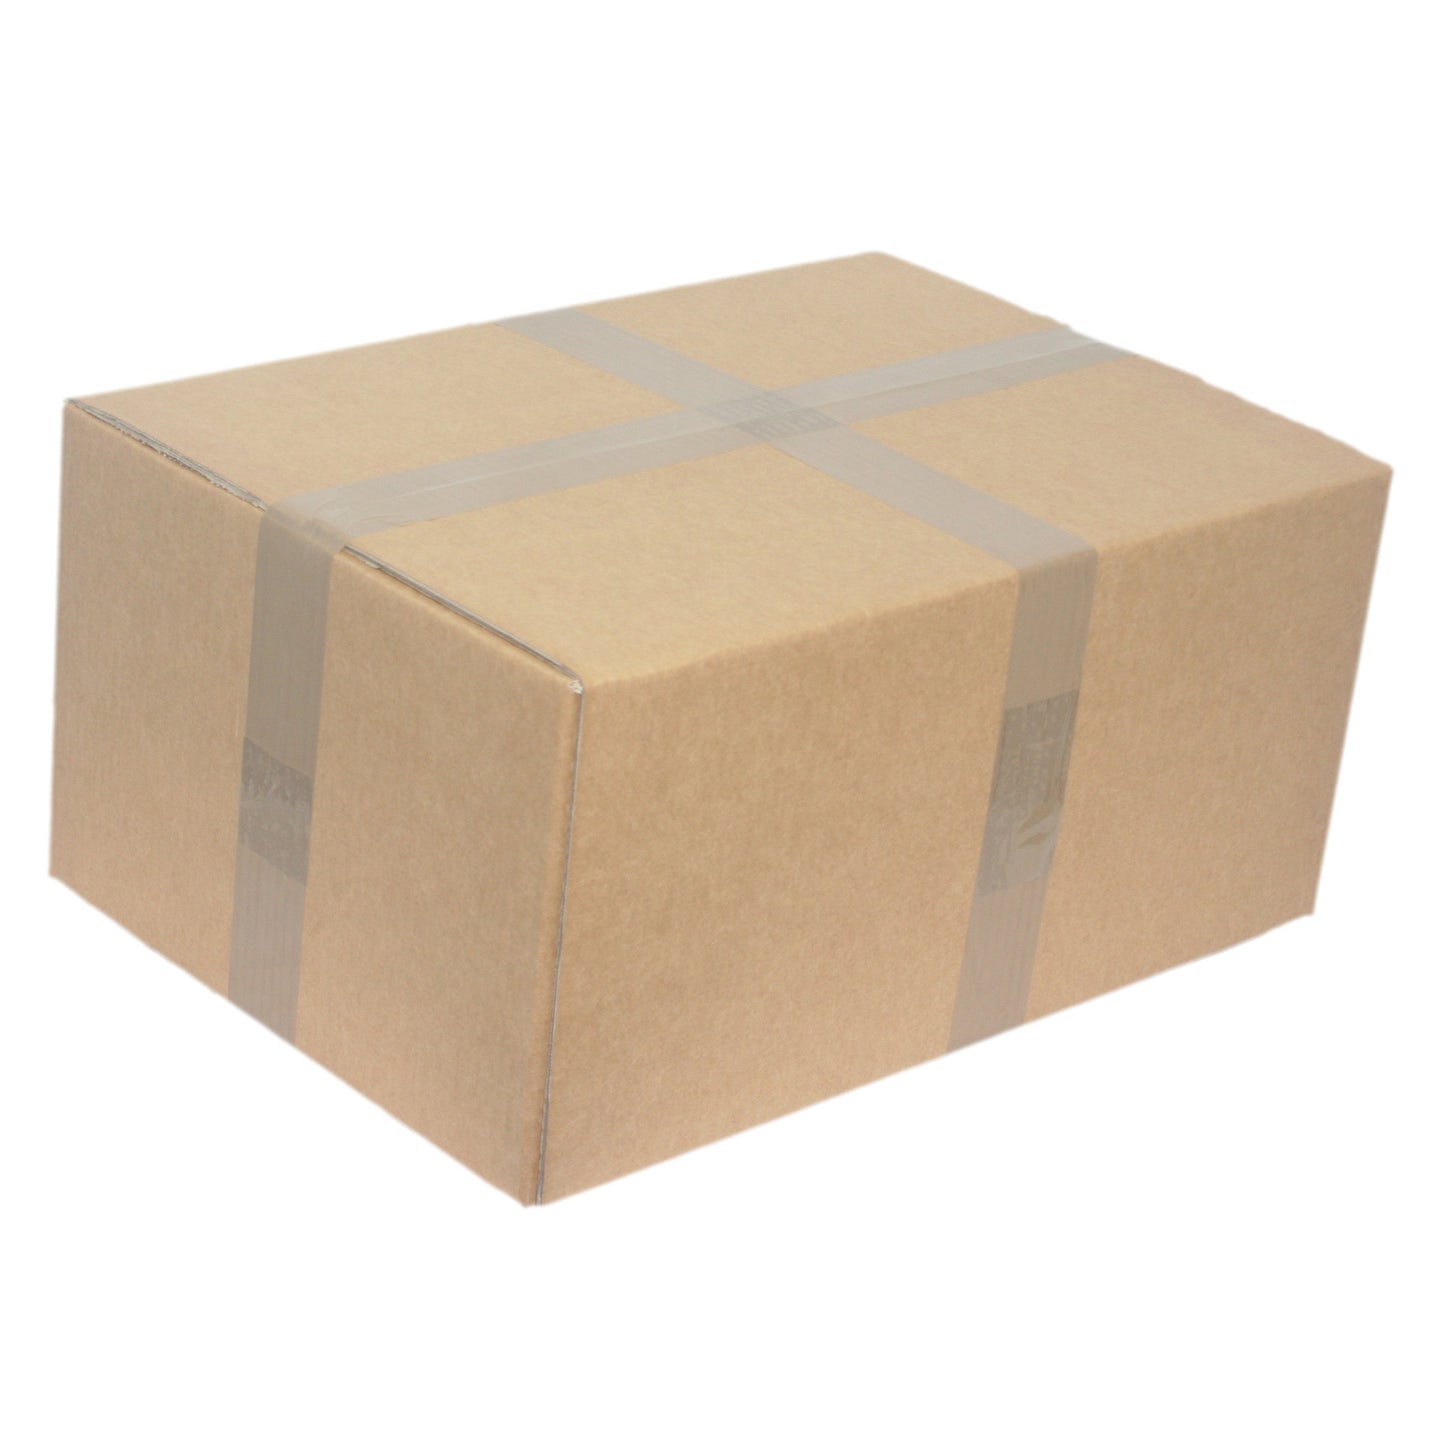 16 Inch Shipping Carton